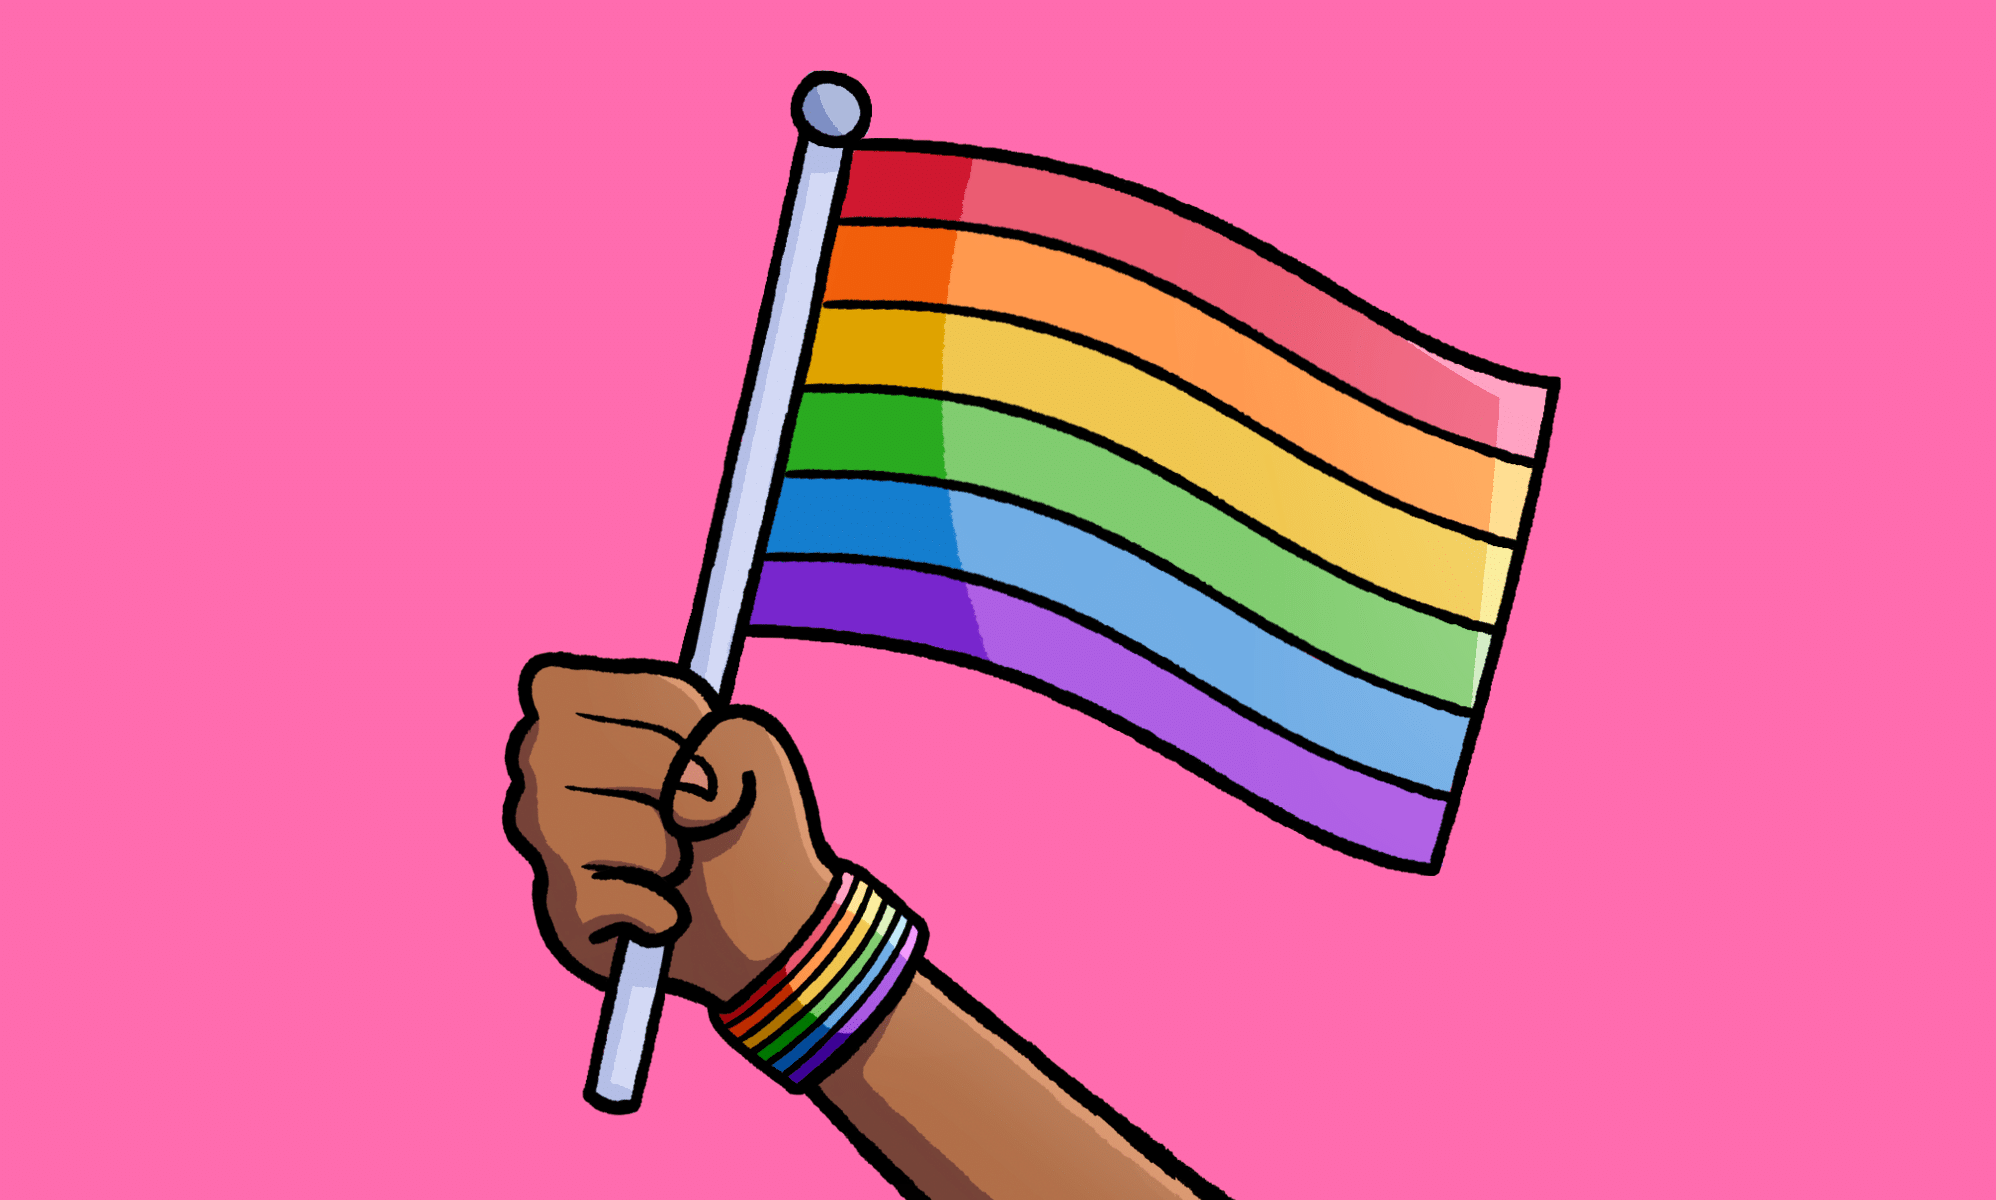 Ellen Page attends Pride flashmob in Jamaica despite fears of violence